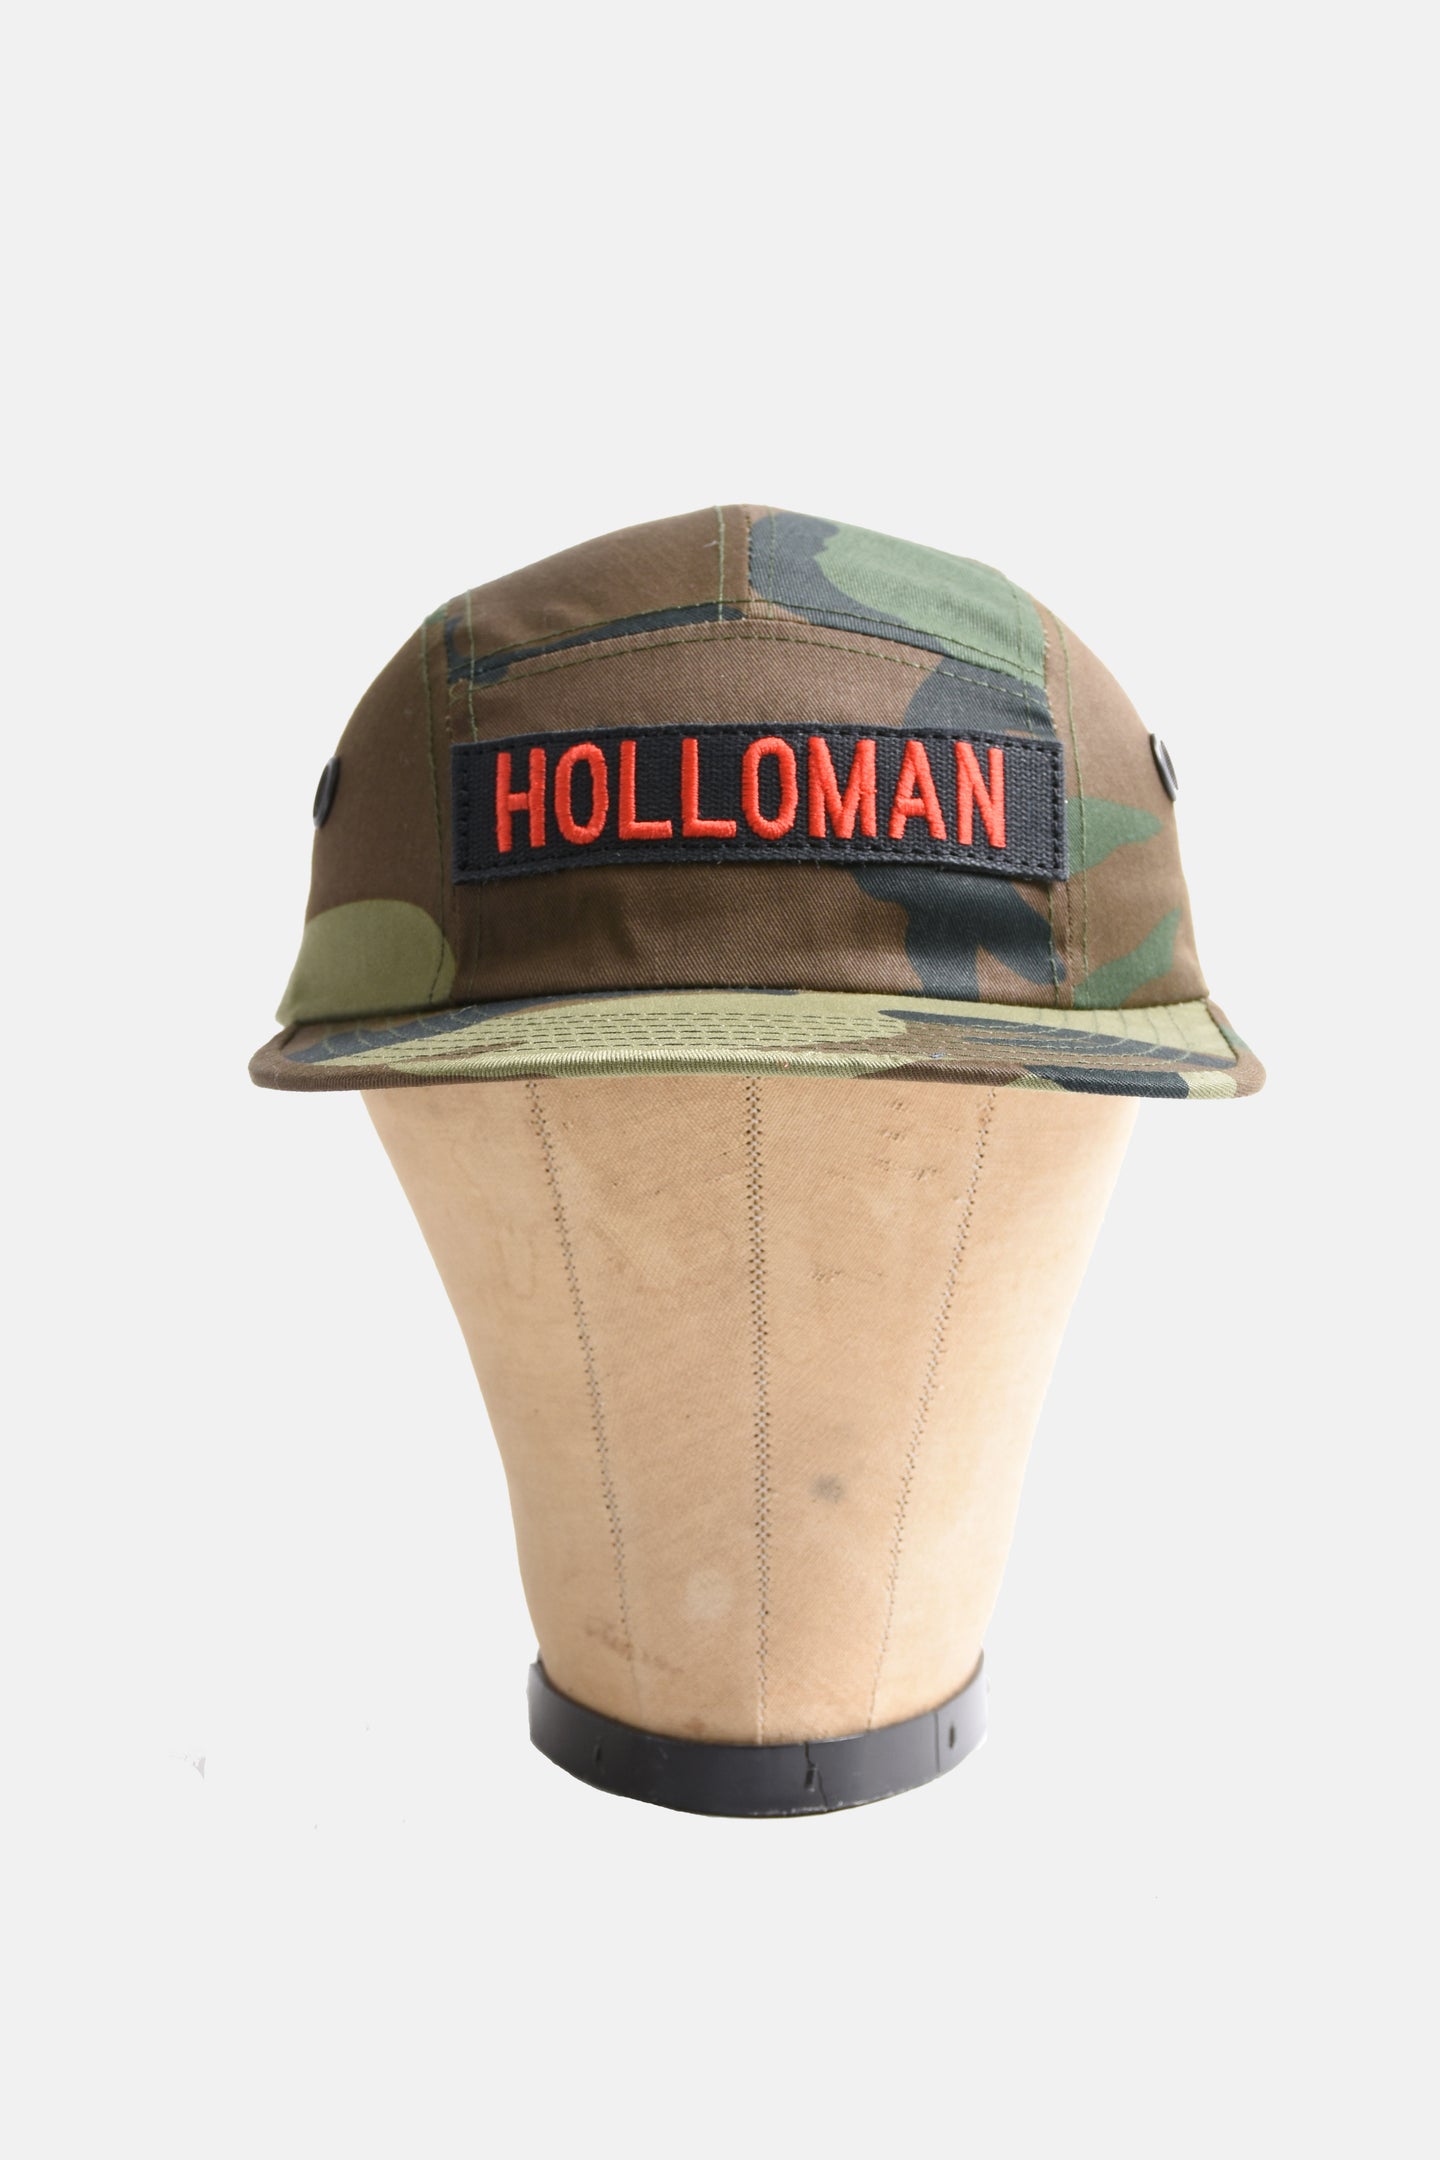 Holloman badge camo hat